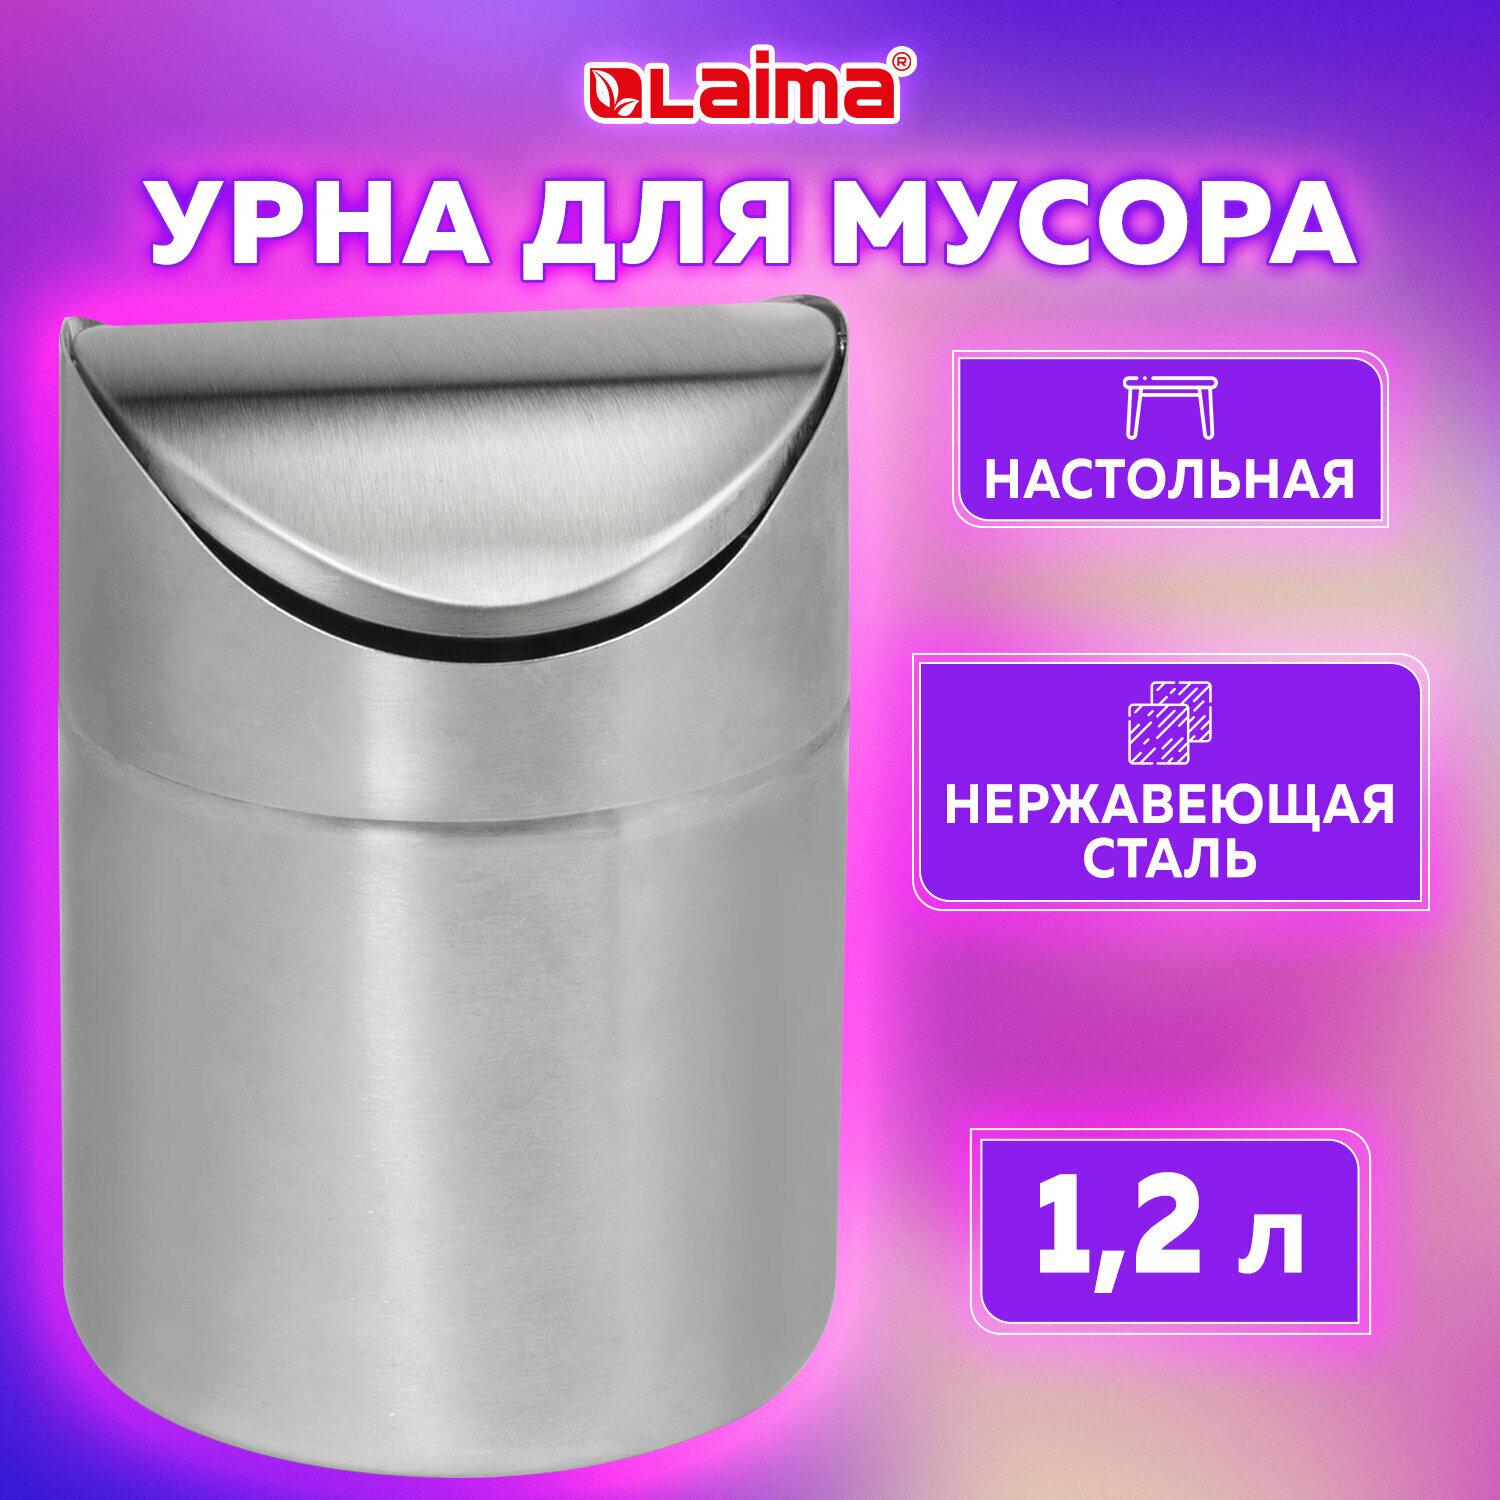 Урна для мусора Laima настольная, с качающейся крышкой, 1,2 л, 12 х 16,5 см, нержавеющая сталь, матовая, 601618